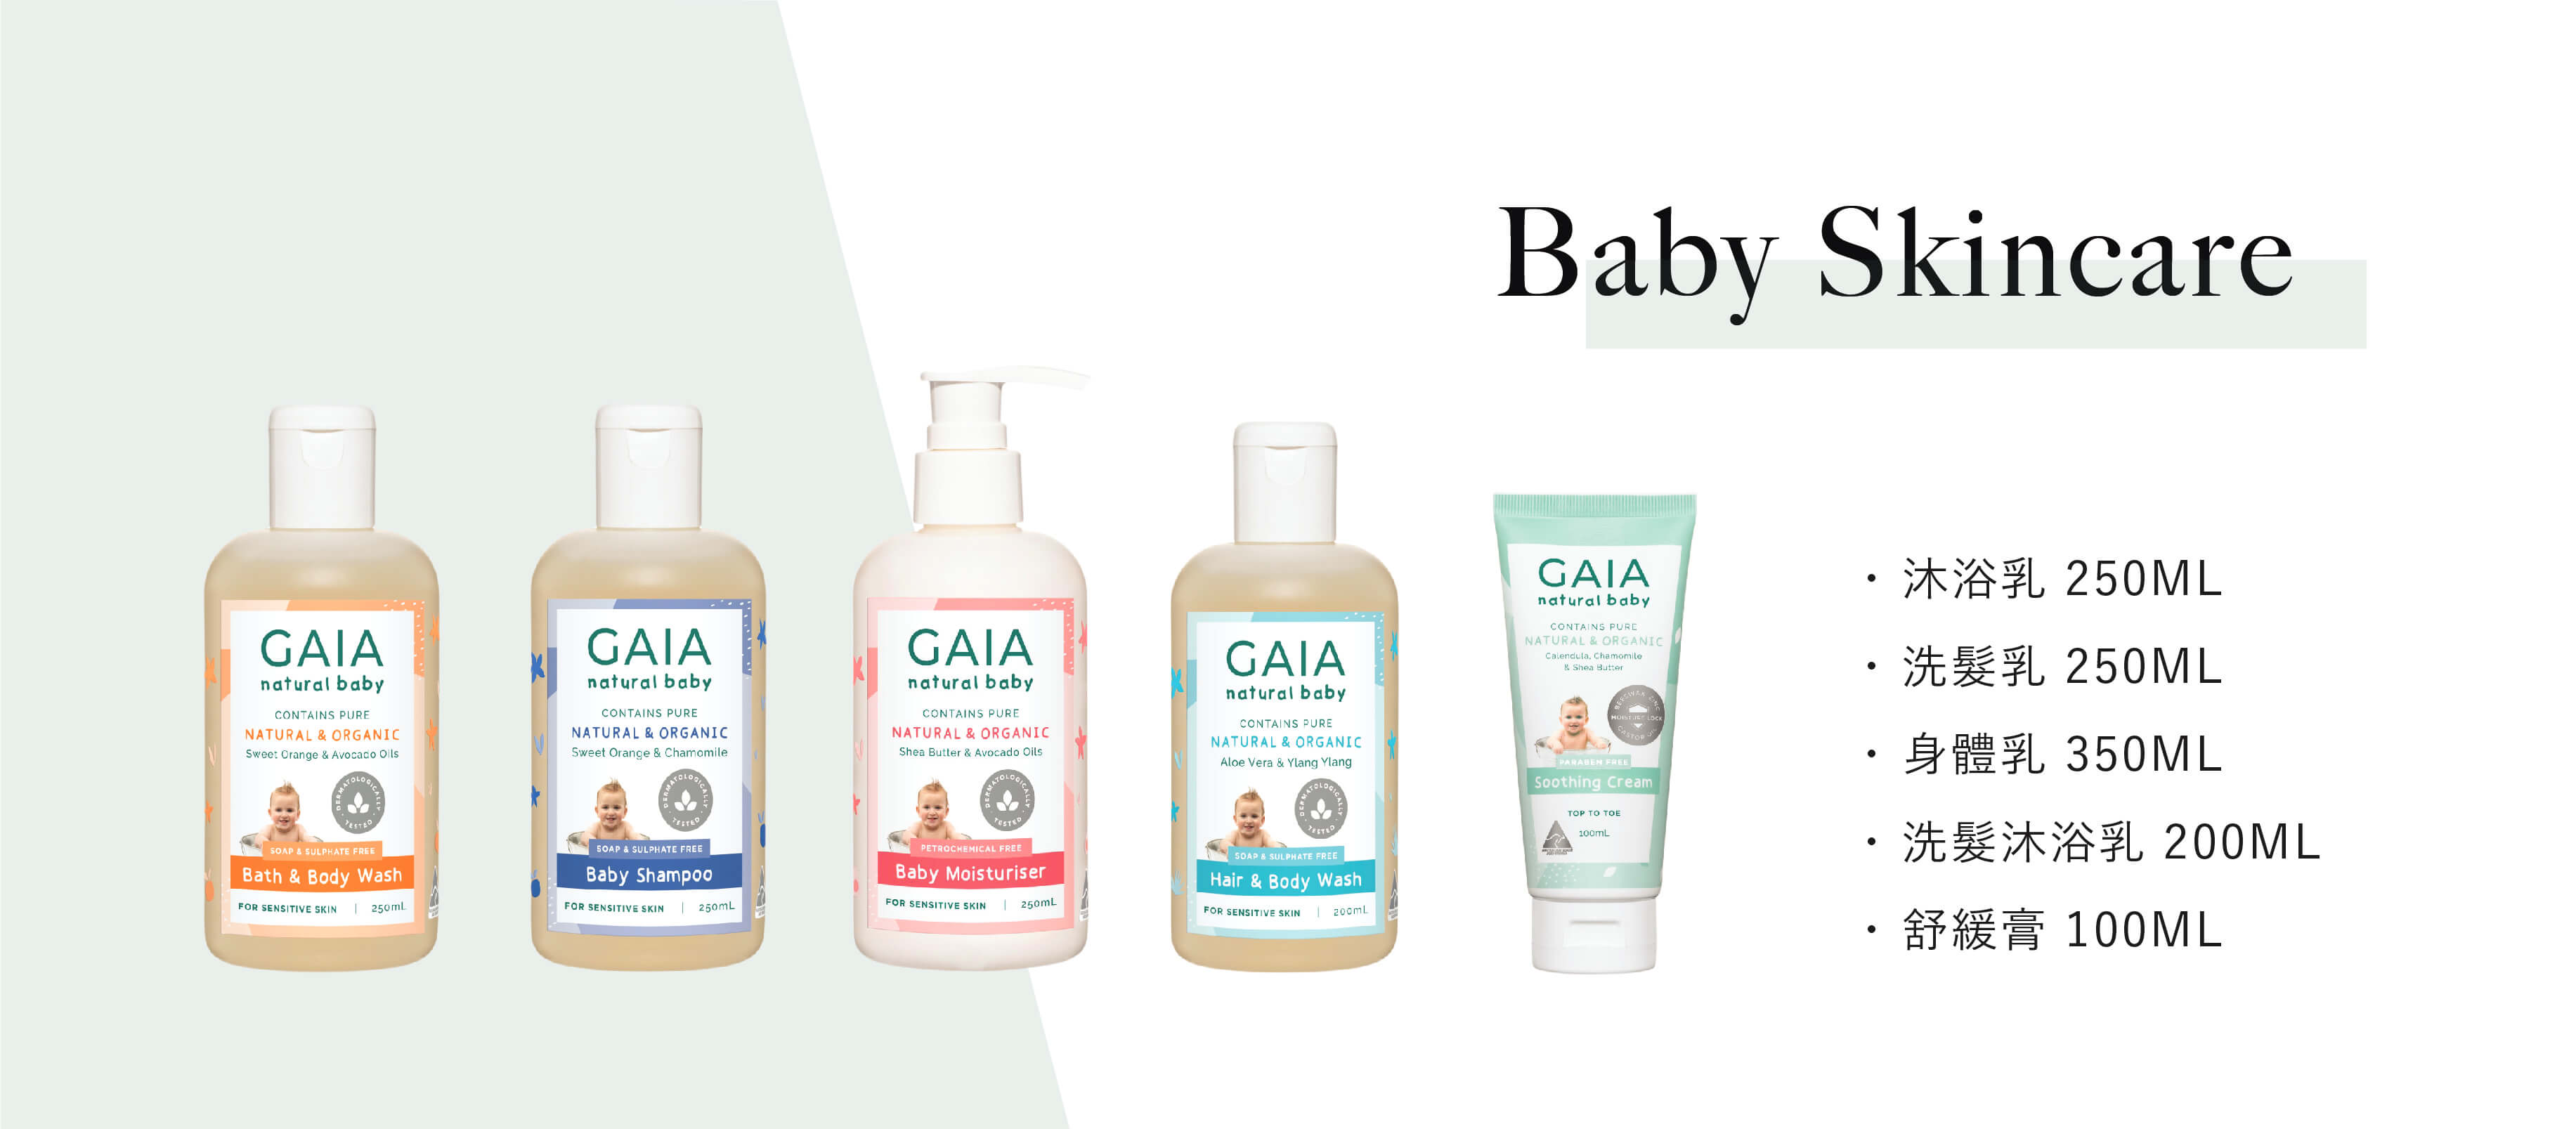 GAIA baby skincare hotel amenities-1